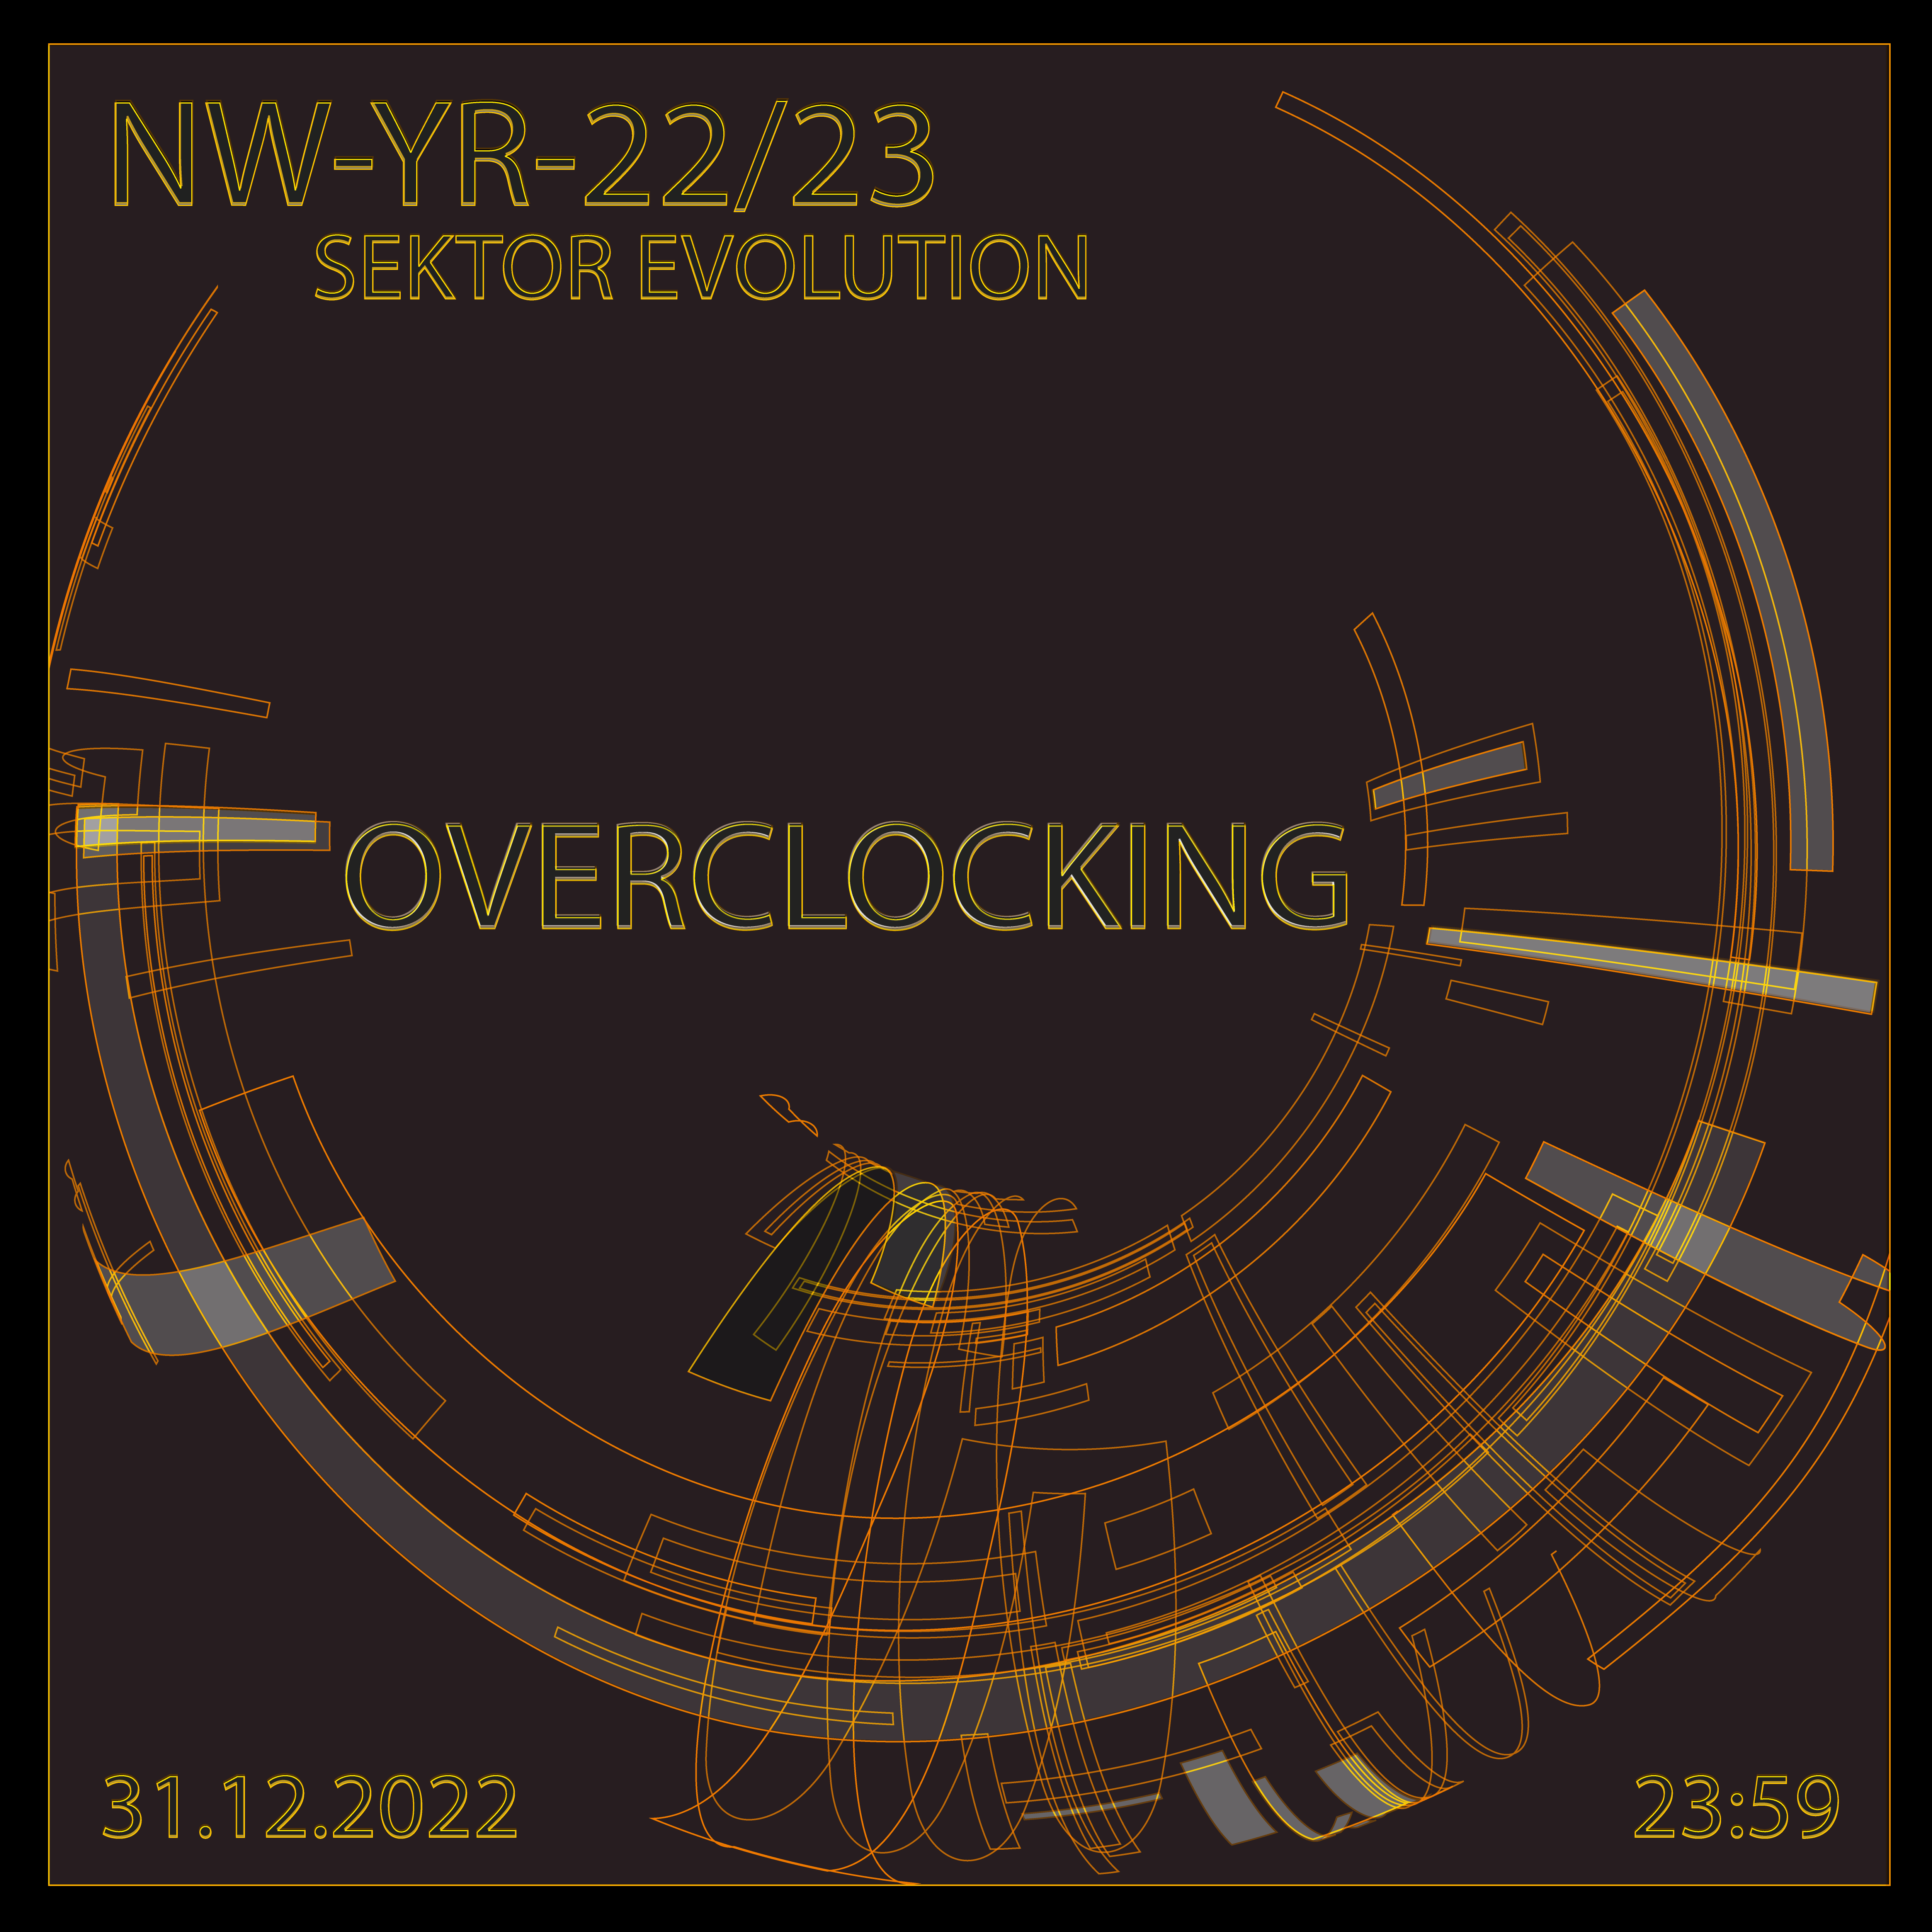 NW-YR-22/23 OVERCLOCKING